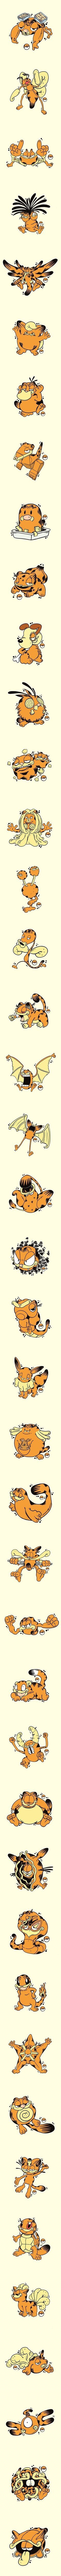 42 pokémon convertidos en Garfield, por Shawn Bowers